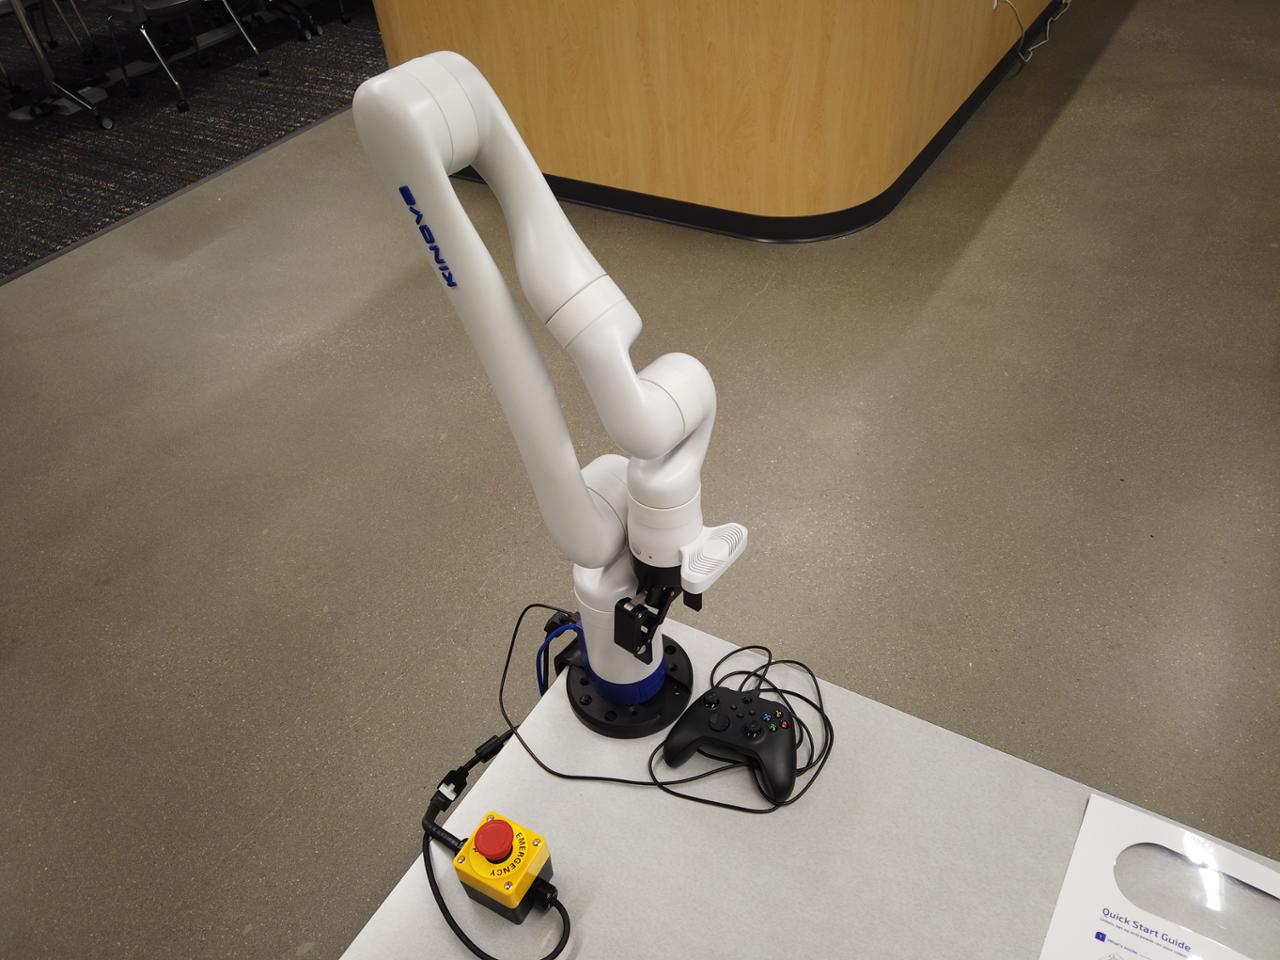 A lightweight robot arm, gamepad, and emergency stop button